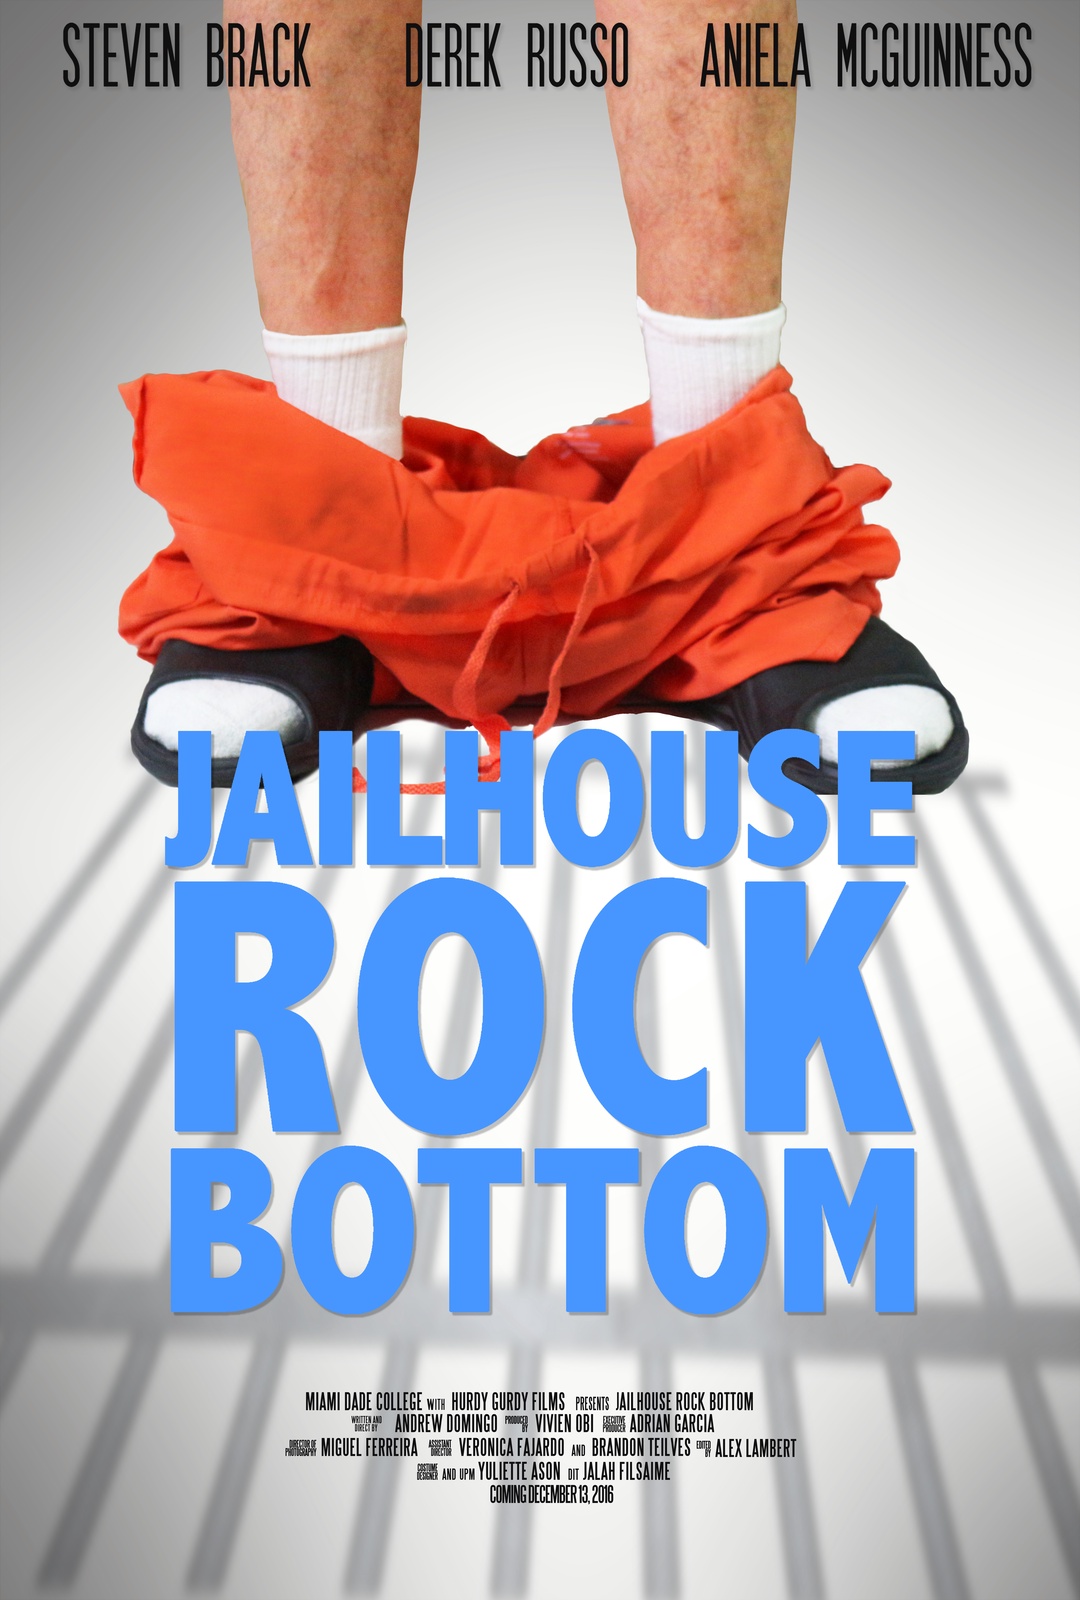 Jailhouse Rock Bottom